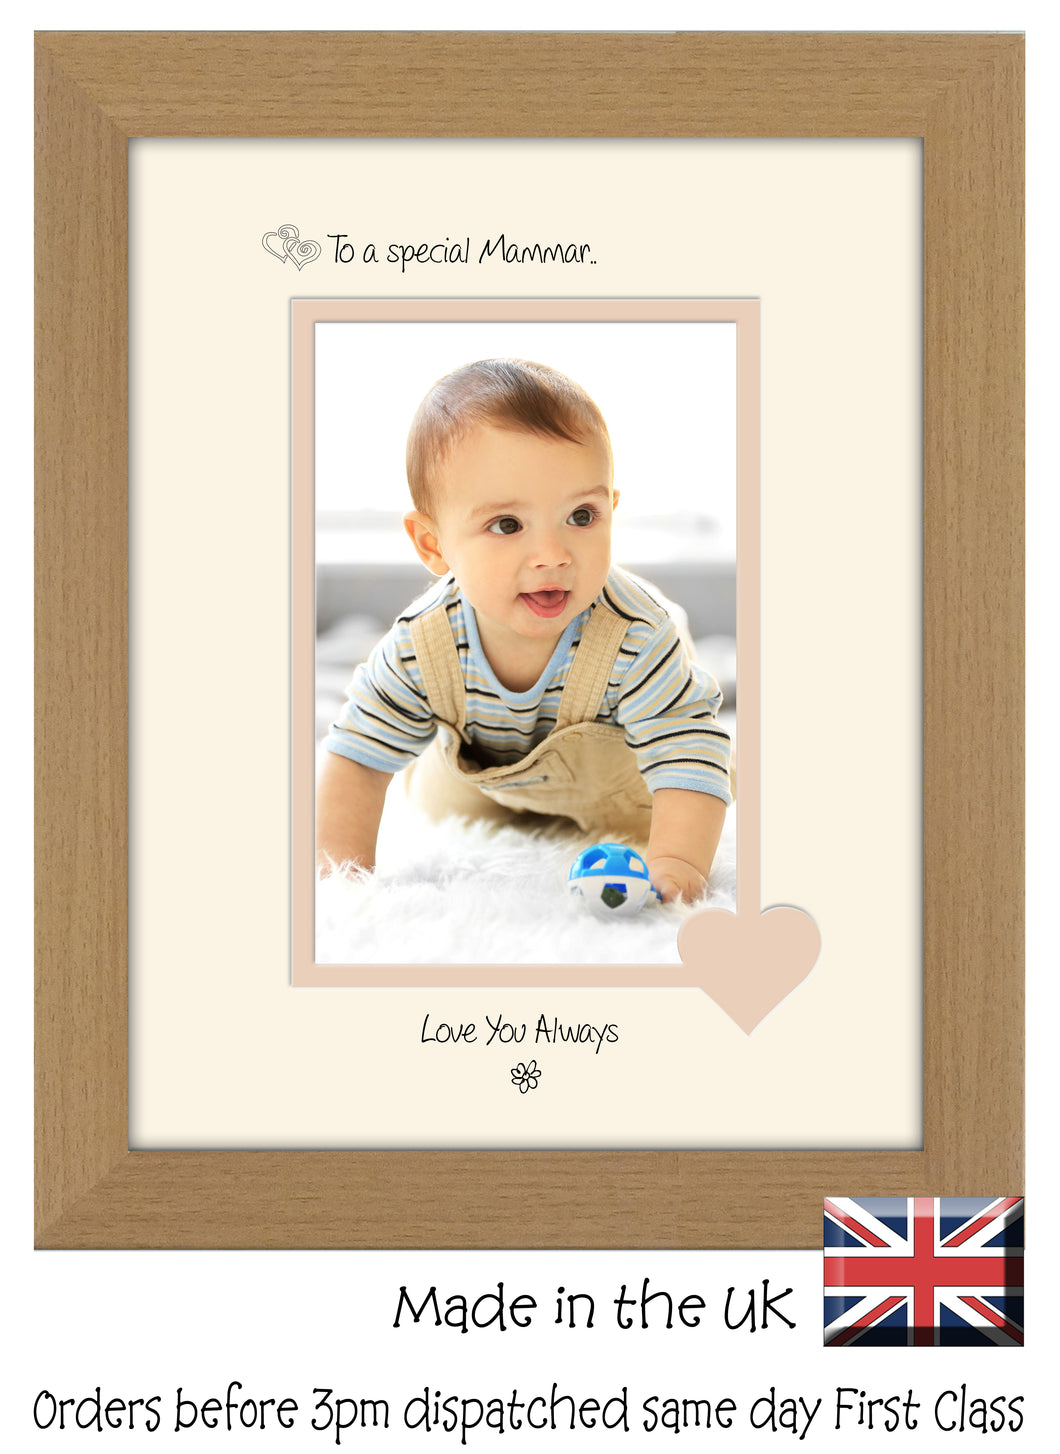 Mammar Photo Frame - To a Special Mammar ... Love you Always Portrait photo frame 6